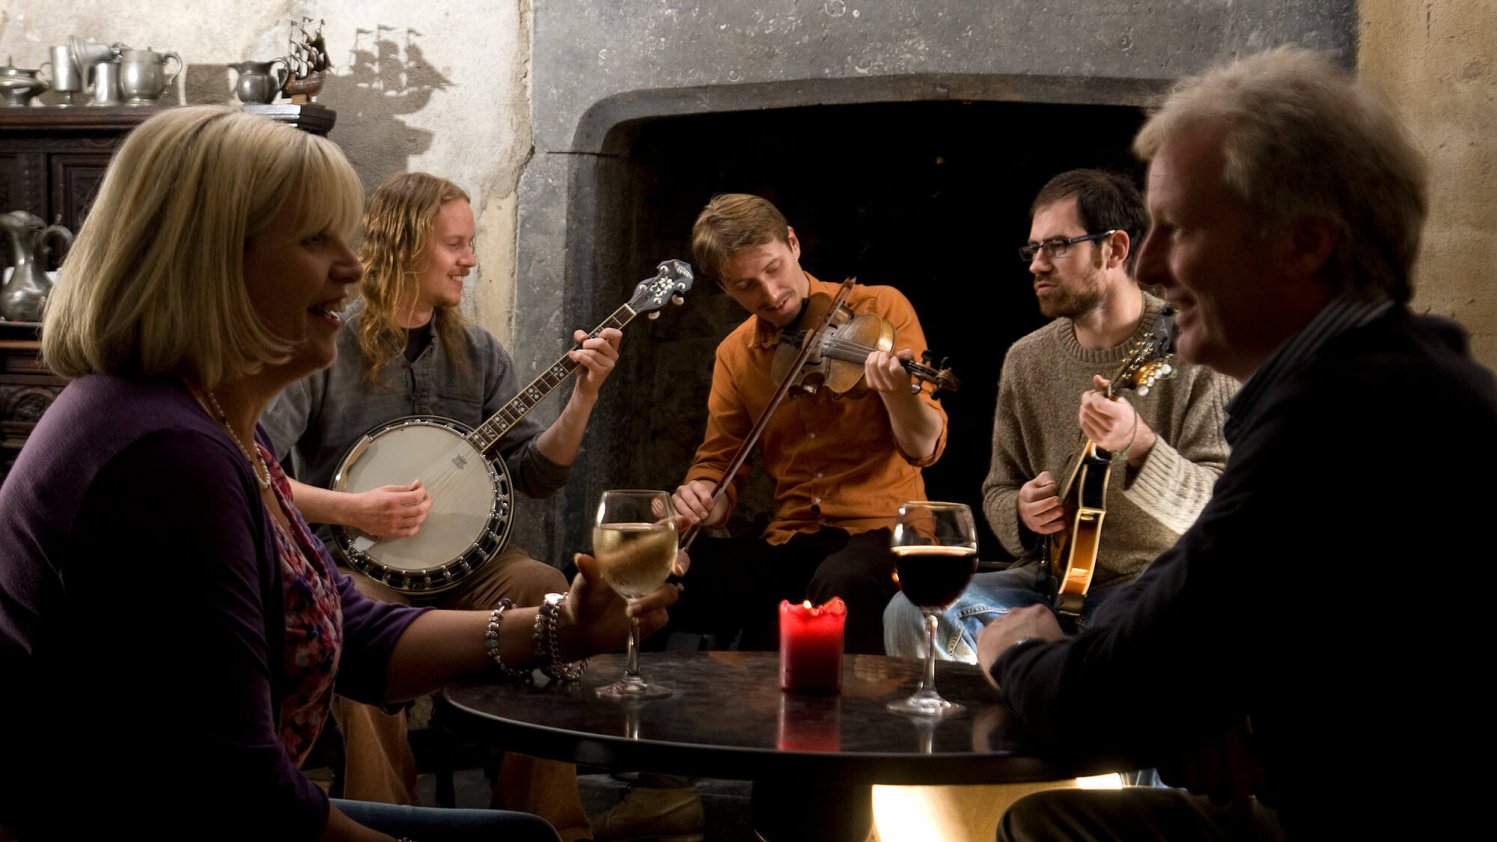 A couple enjoy three Irish traditional musicians in a bar